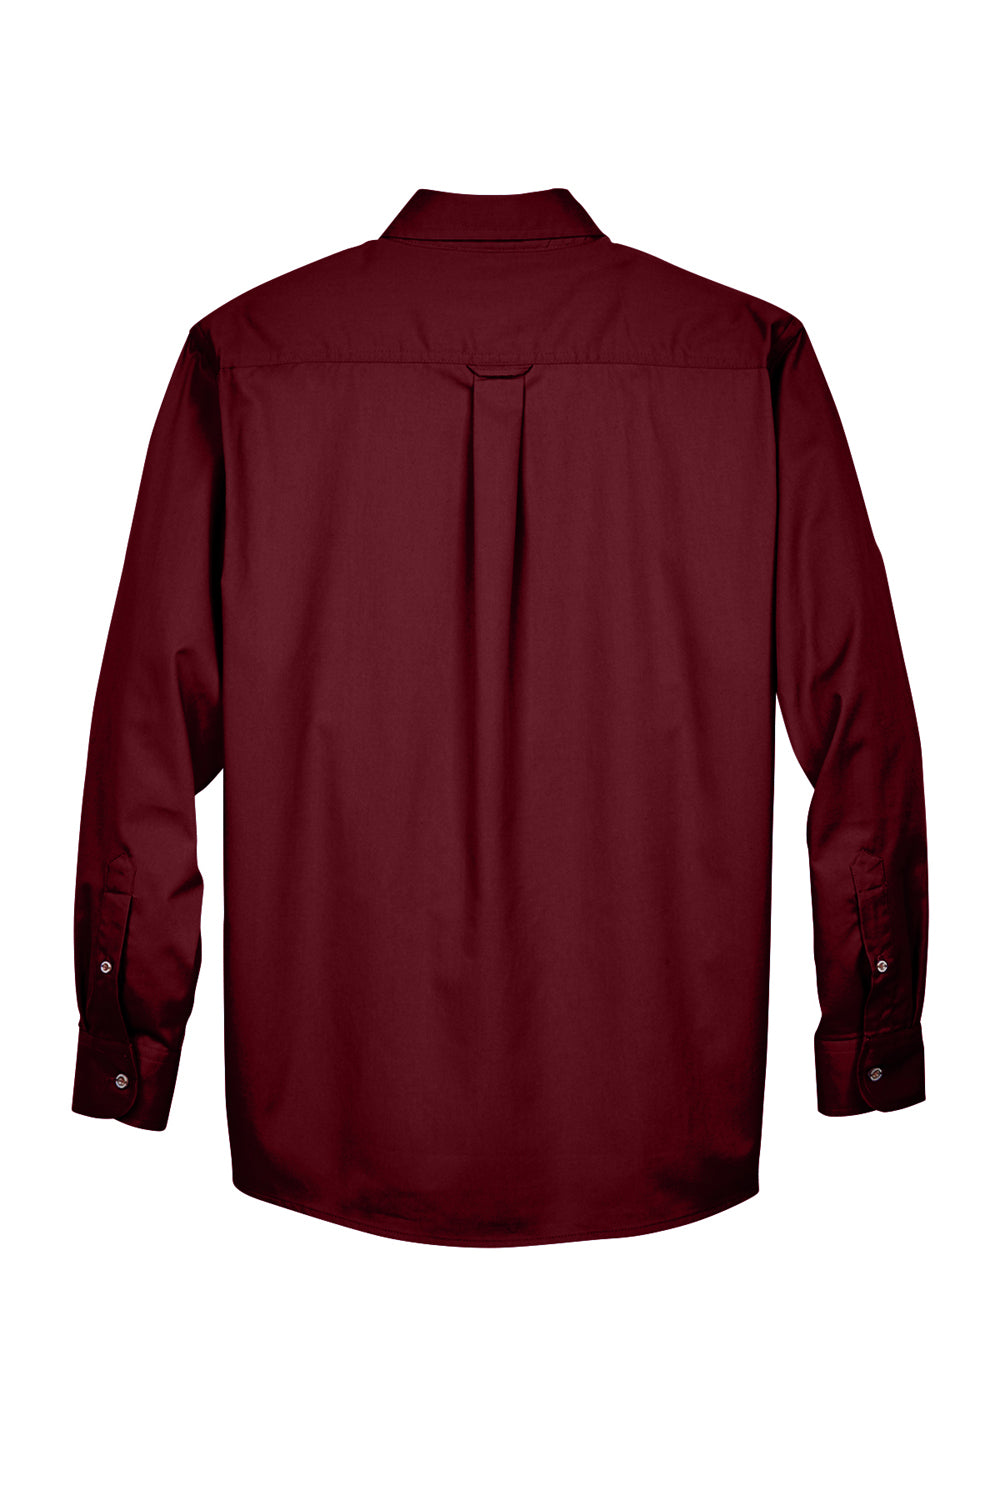 Harriton M500/M500T Wrinkle Resistant Long Sleeve Button Down Shirt w/ Pocket Wine Flat Back